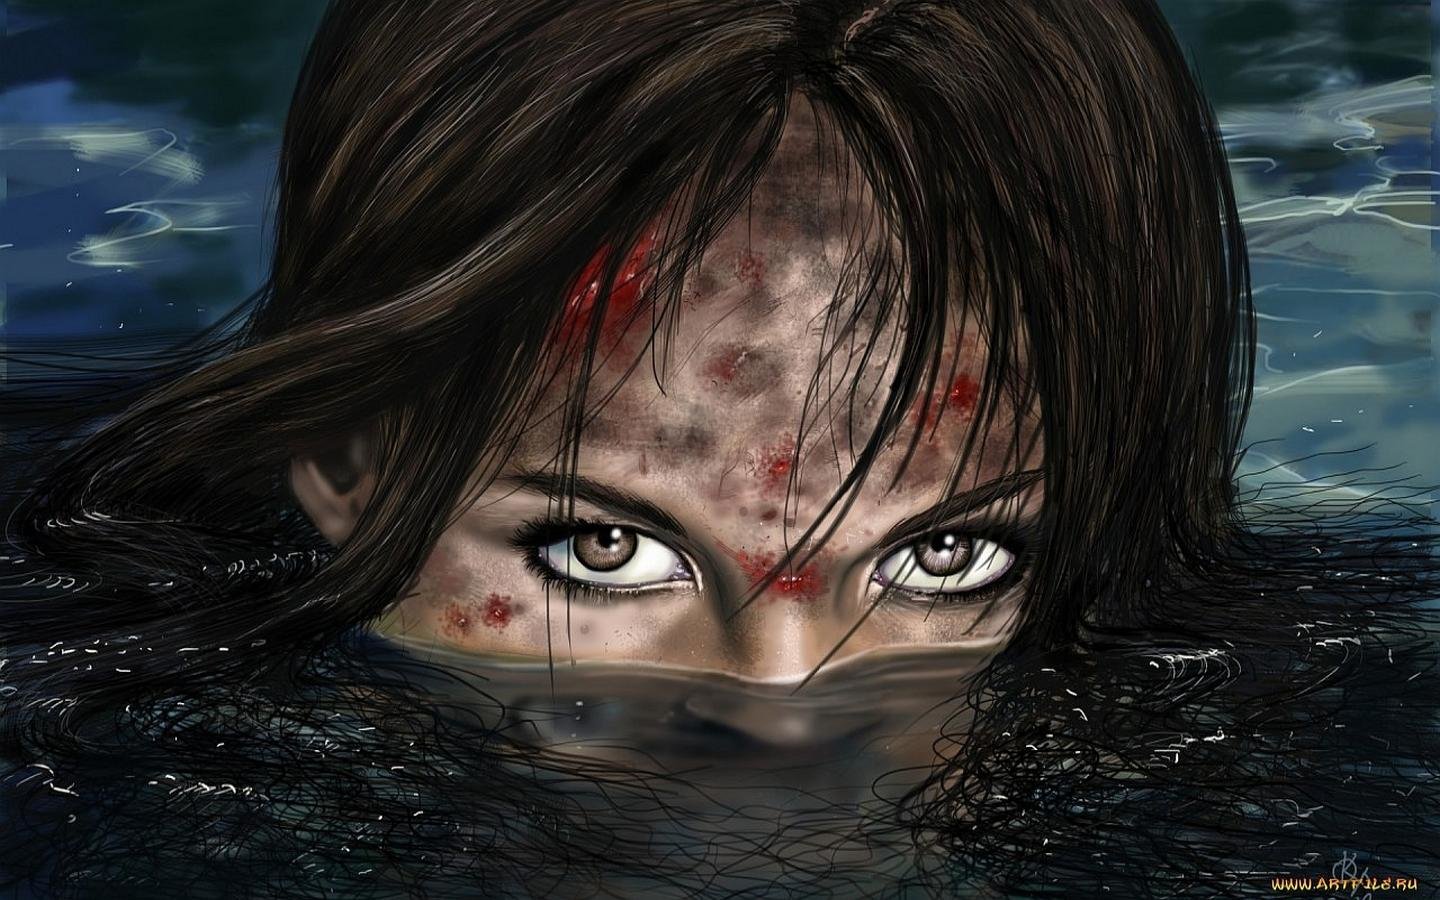 Best Tomb Raider (Lara Croft) background ID:436882 for High Resolution hd 1440x900 PC